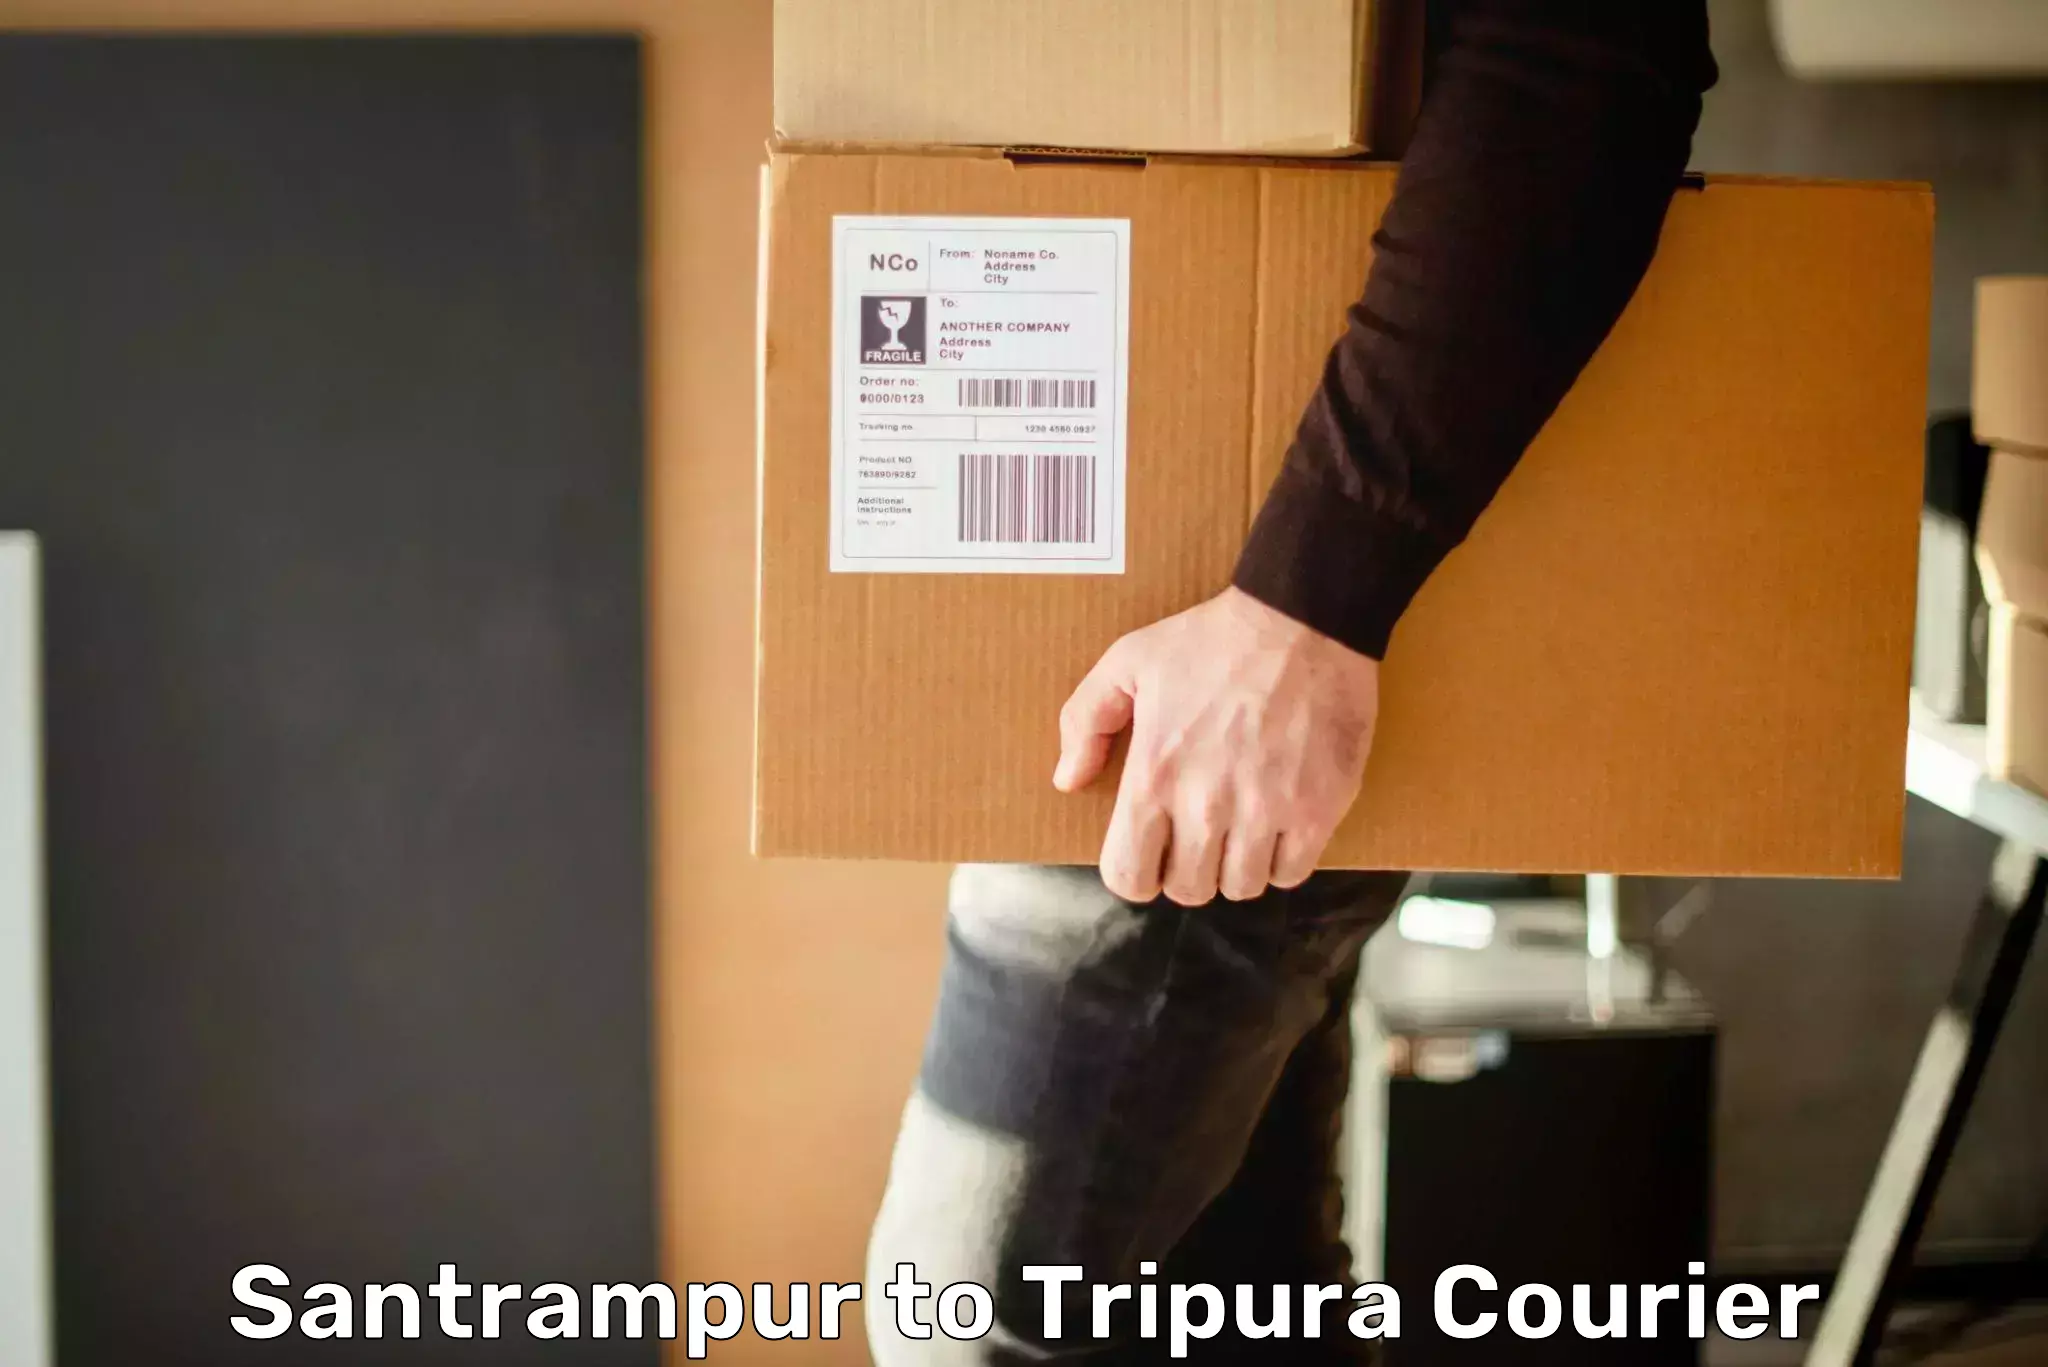 Global delivery options Santrampur to Udaipur Tripura